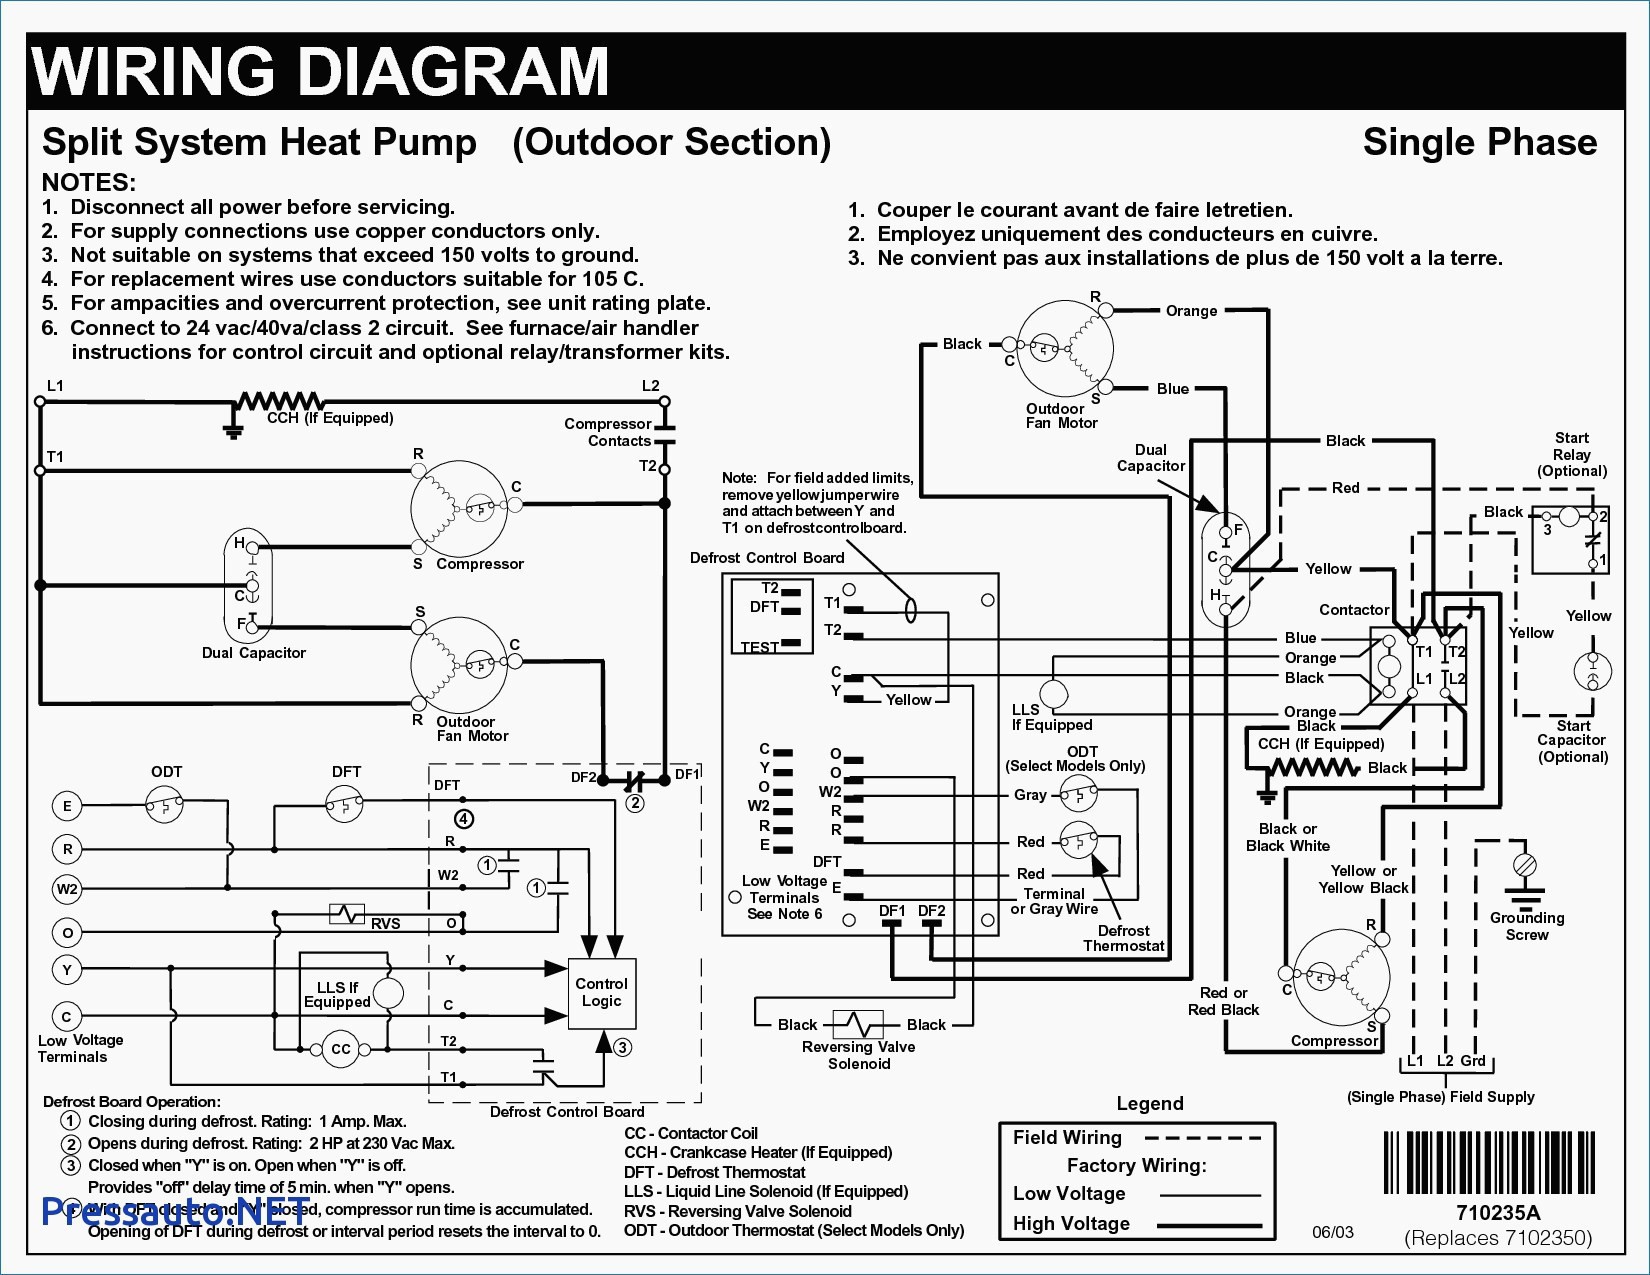 Wiring Diagram for Trane Air Conditioner Trane Air Conditioner Troubleshooting Free and Wiring Diagram Of Wiring Diagram for Trane Air Conditioner